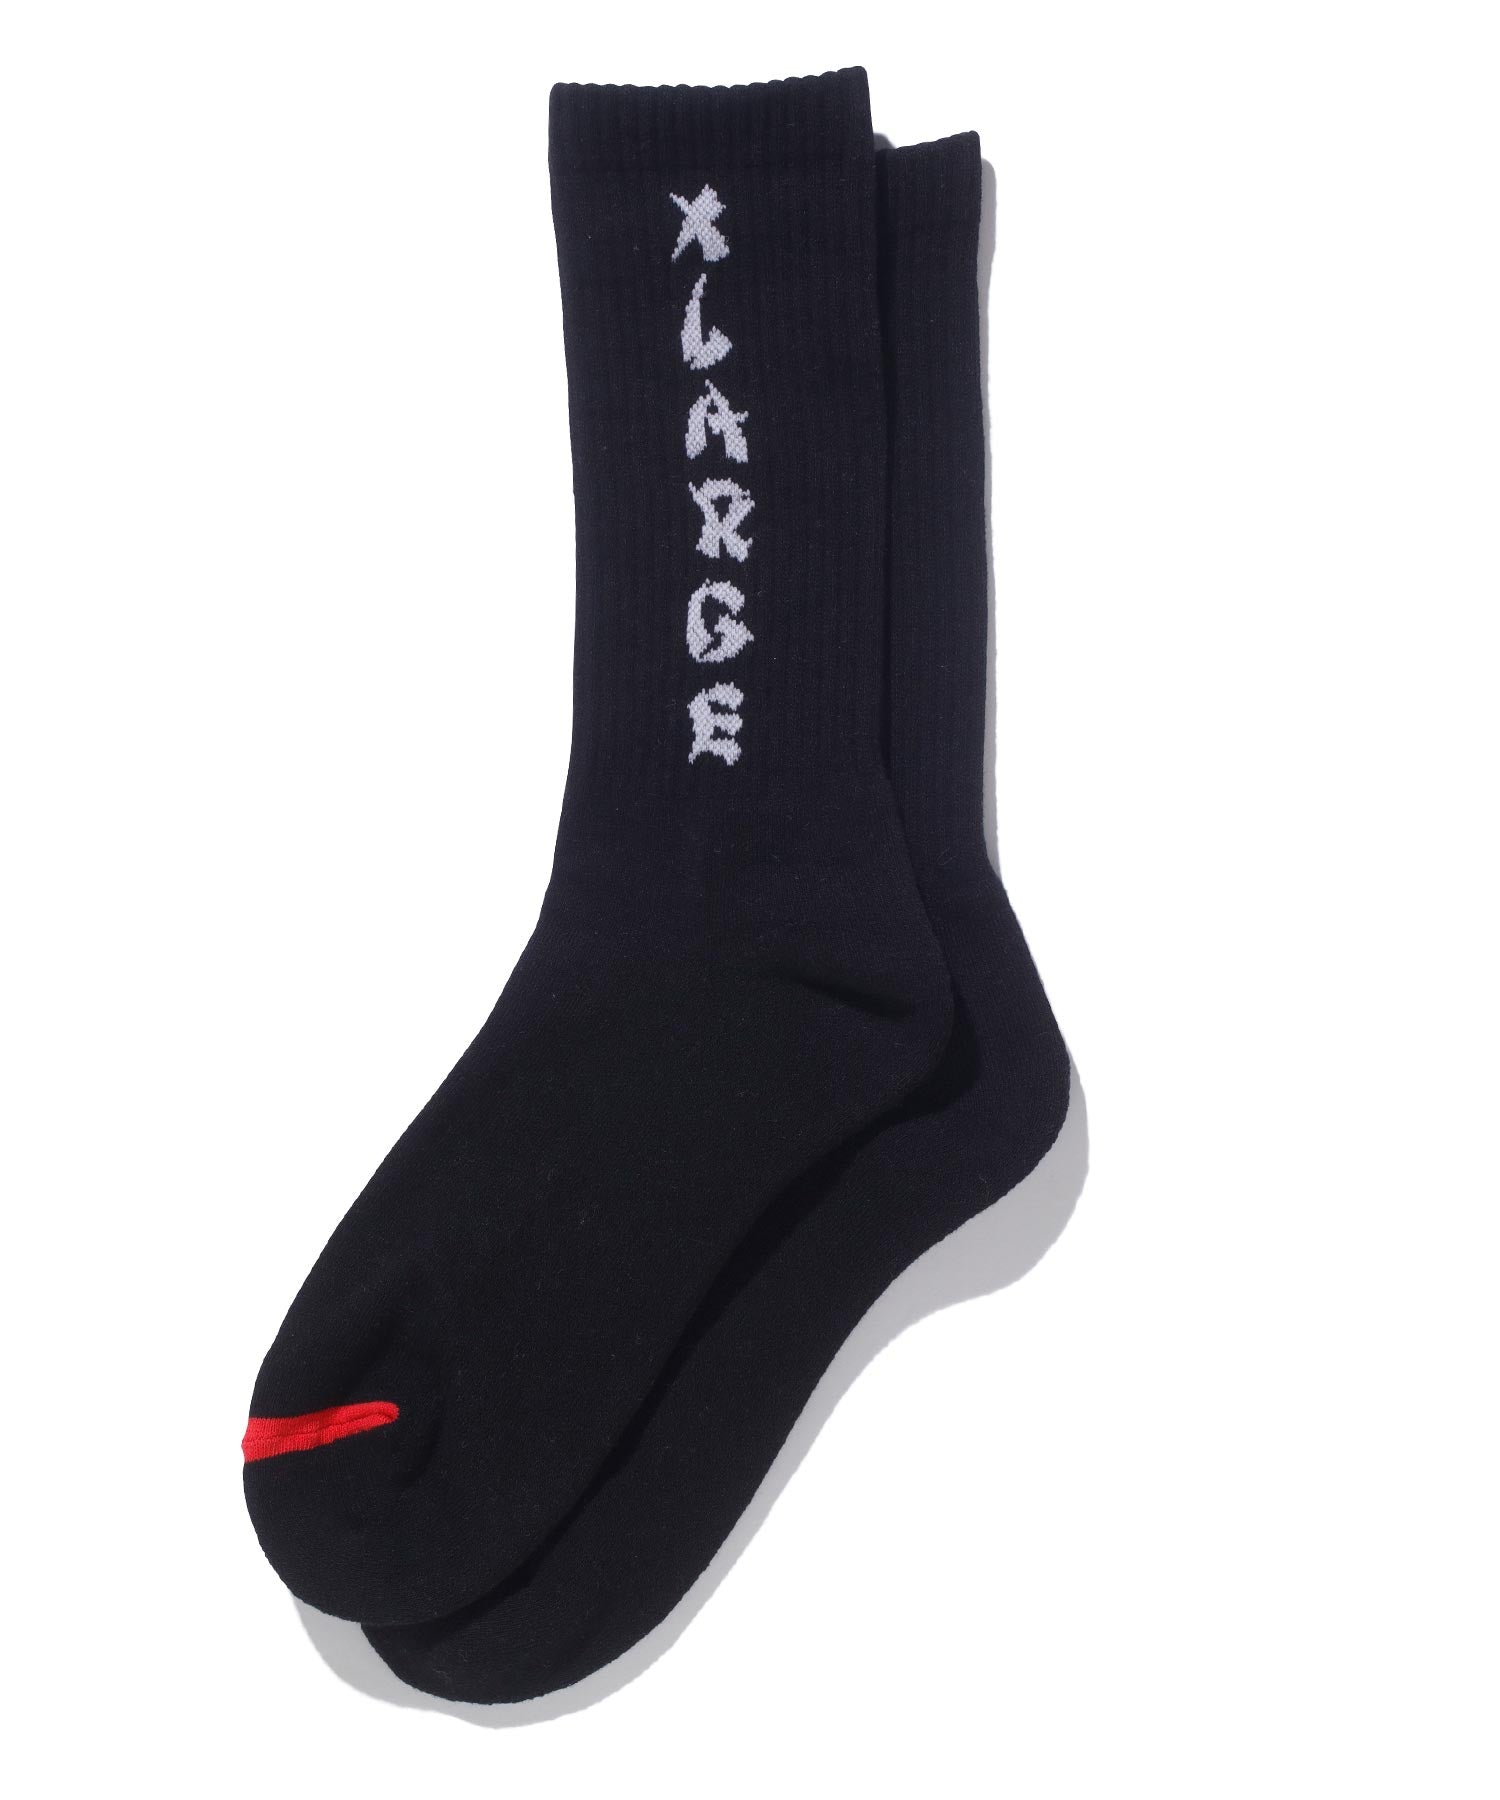 Kung Fu Socks for Sale